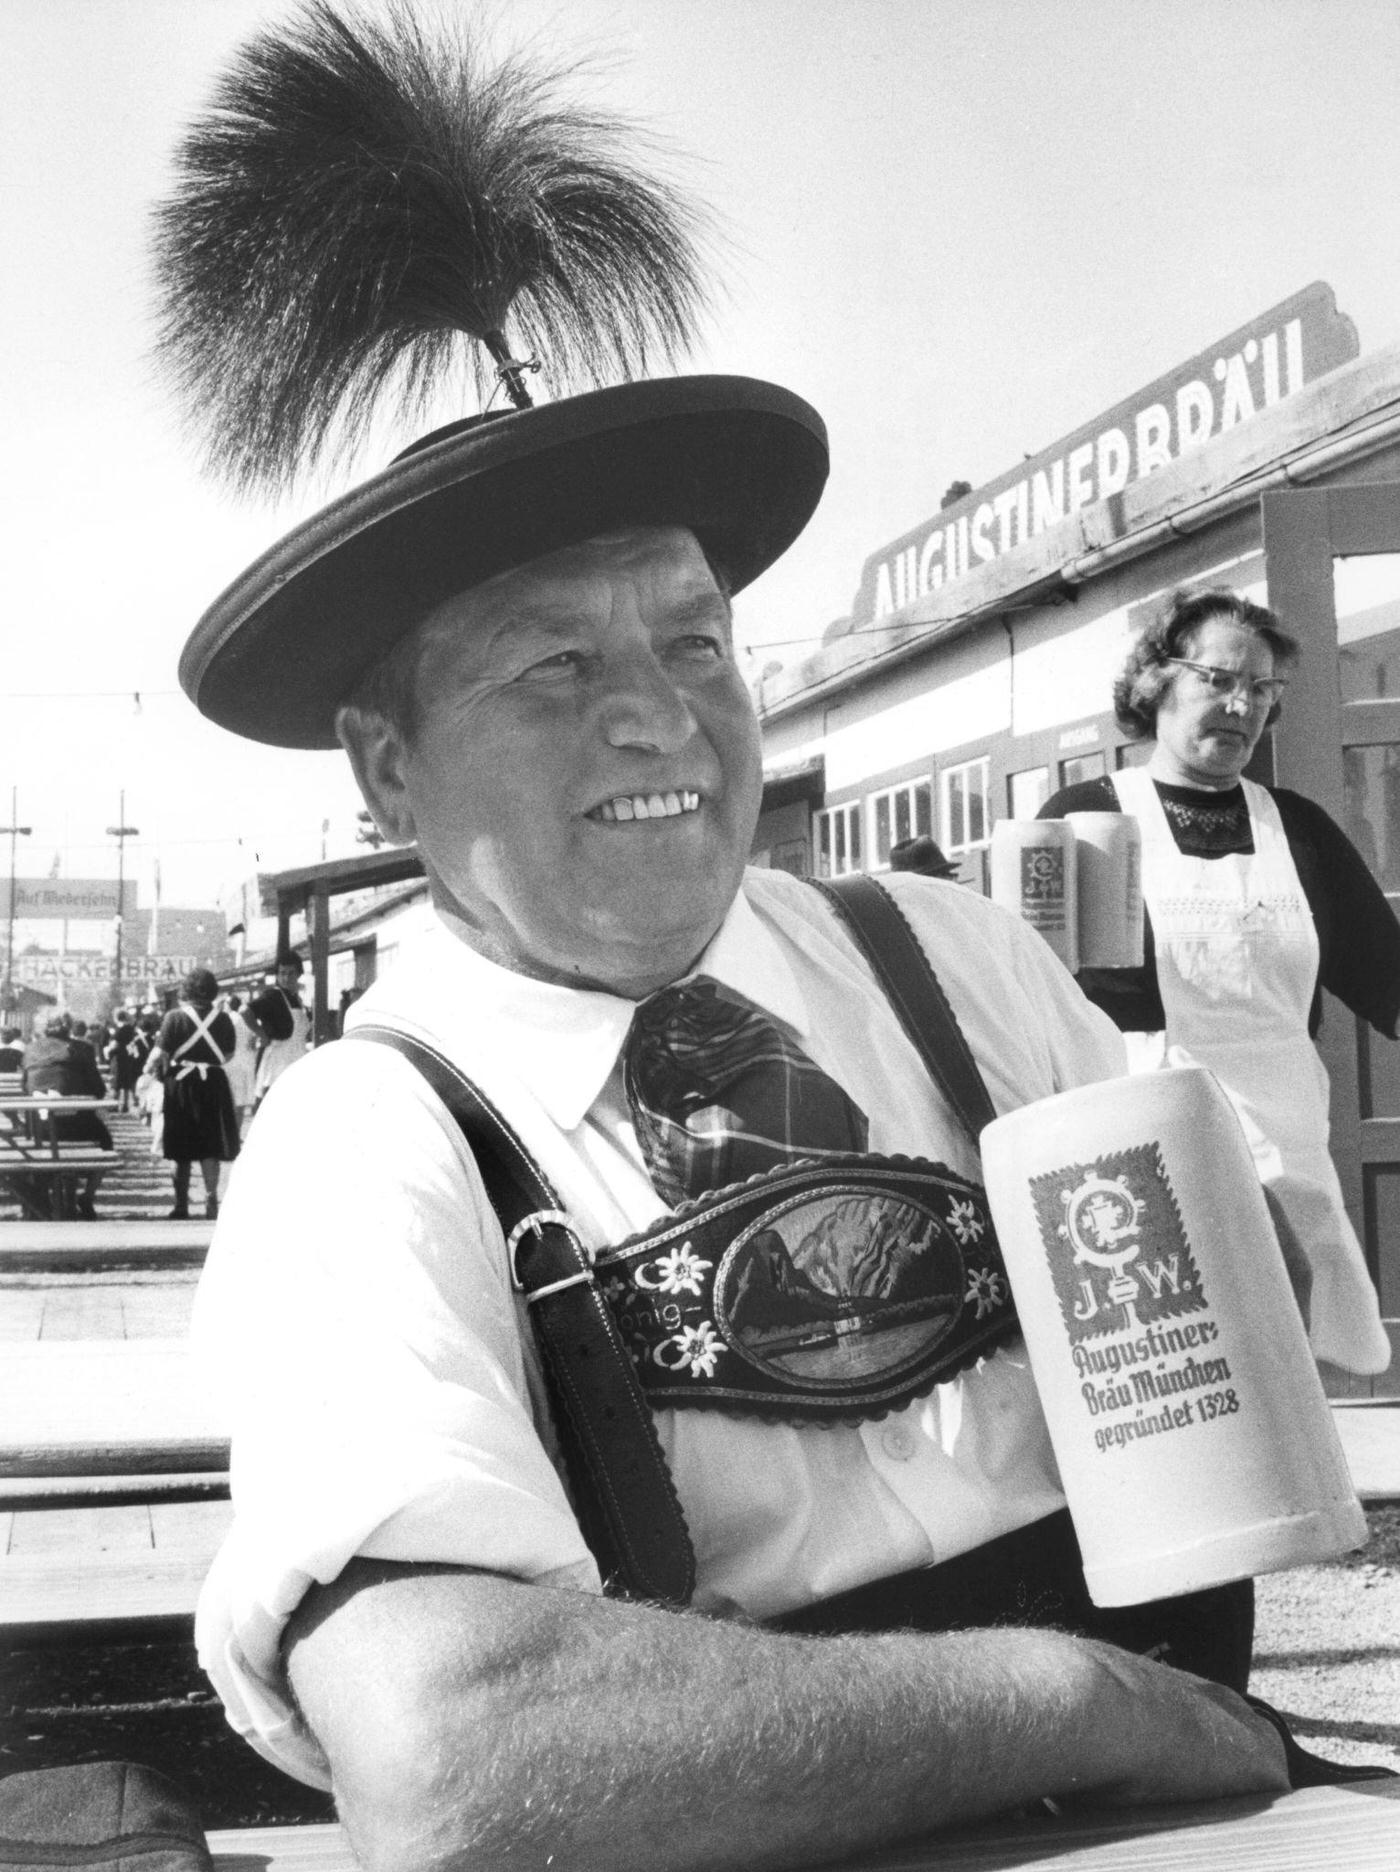 Bavarian man with beer tankard at Oktoberfest, 1964.